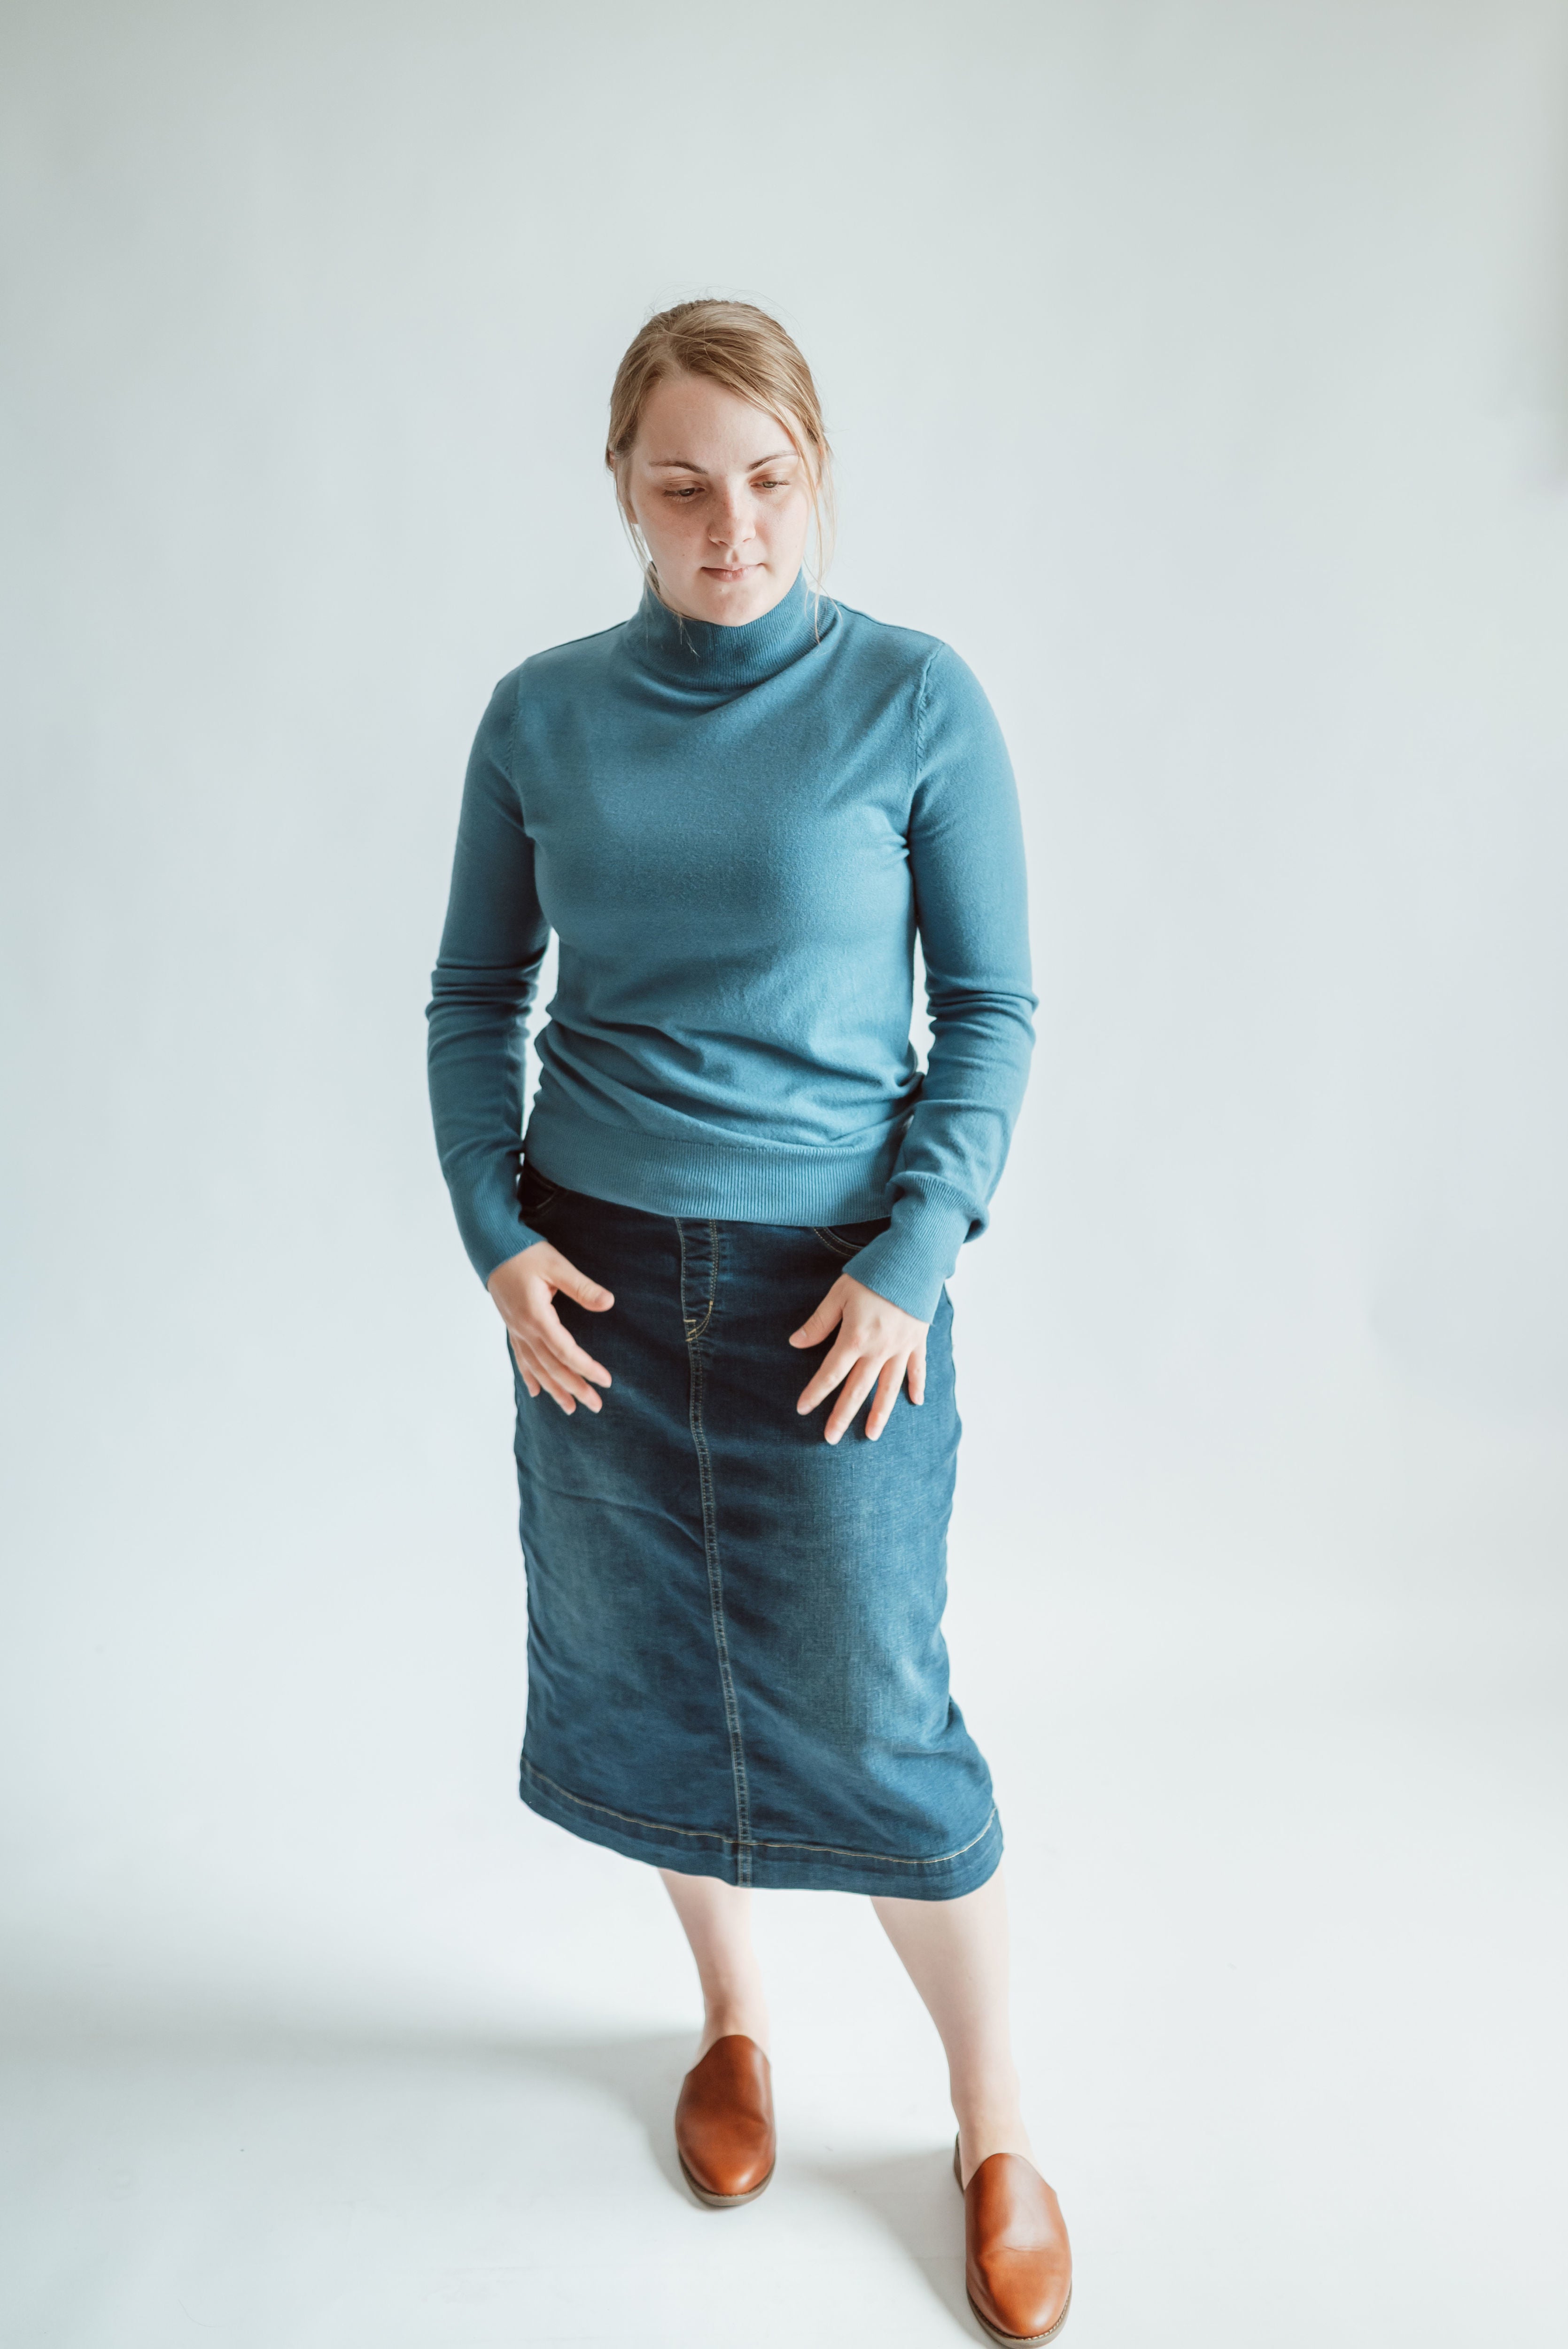 Celia Mock Neck Sweater in Teal - FINAL SALE